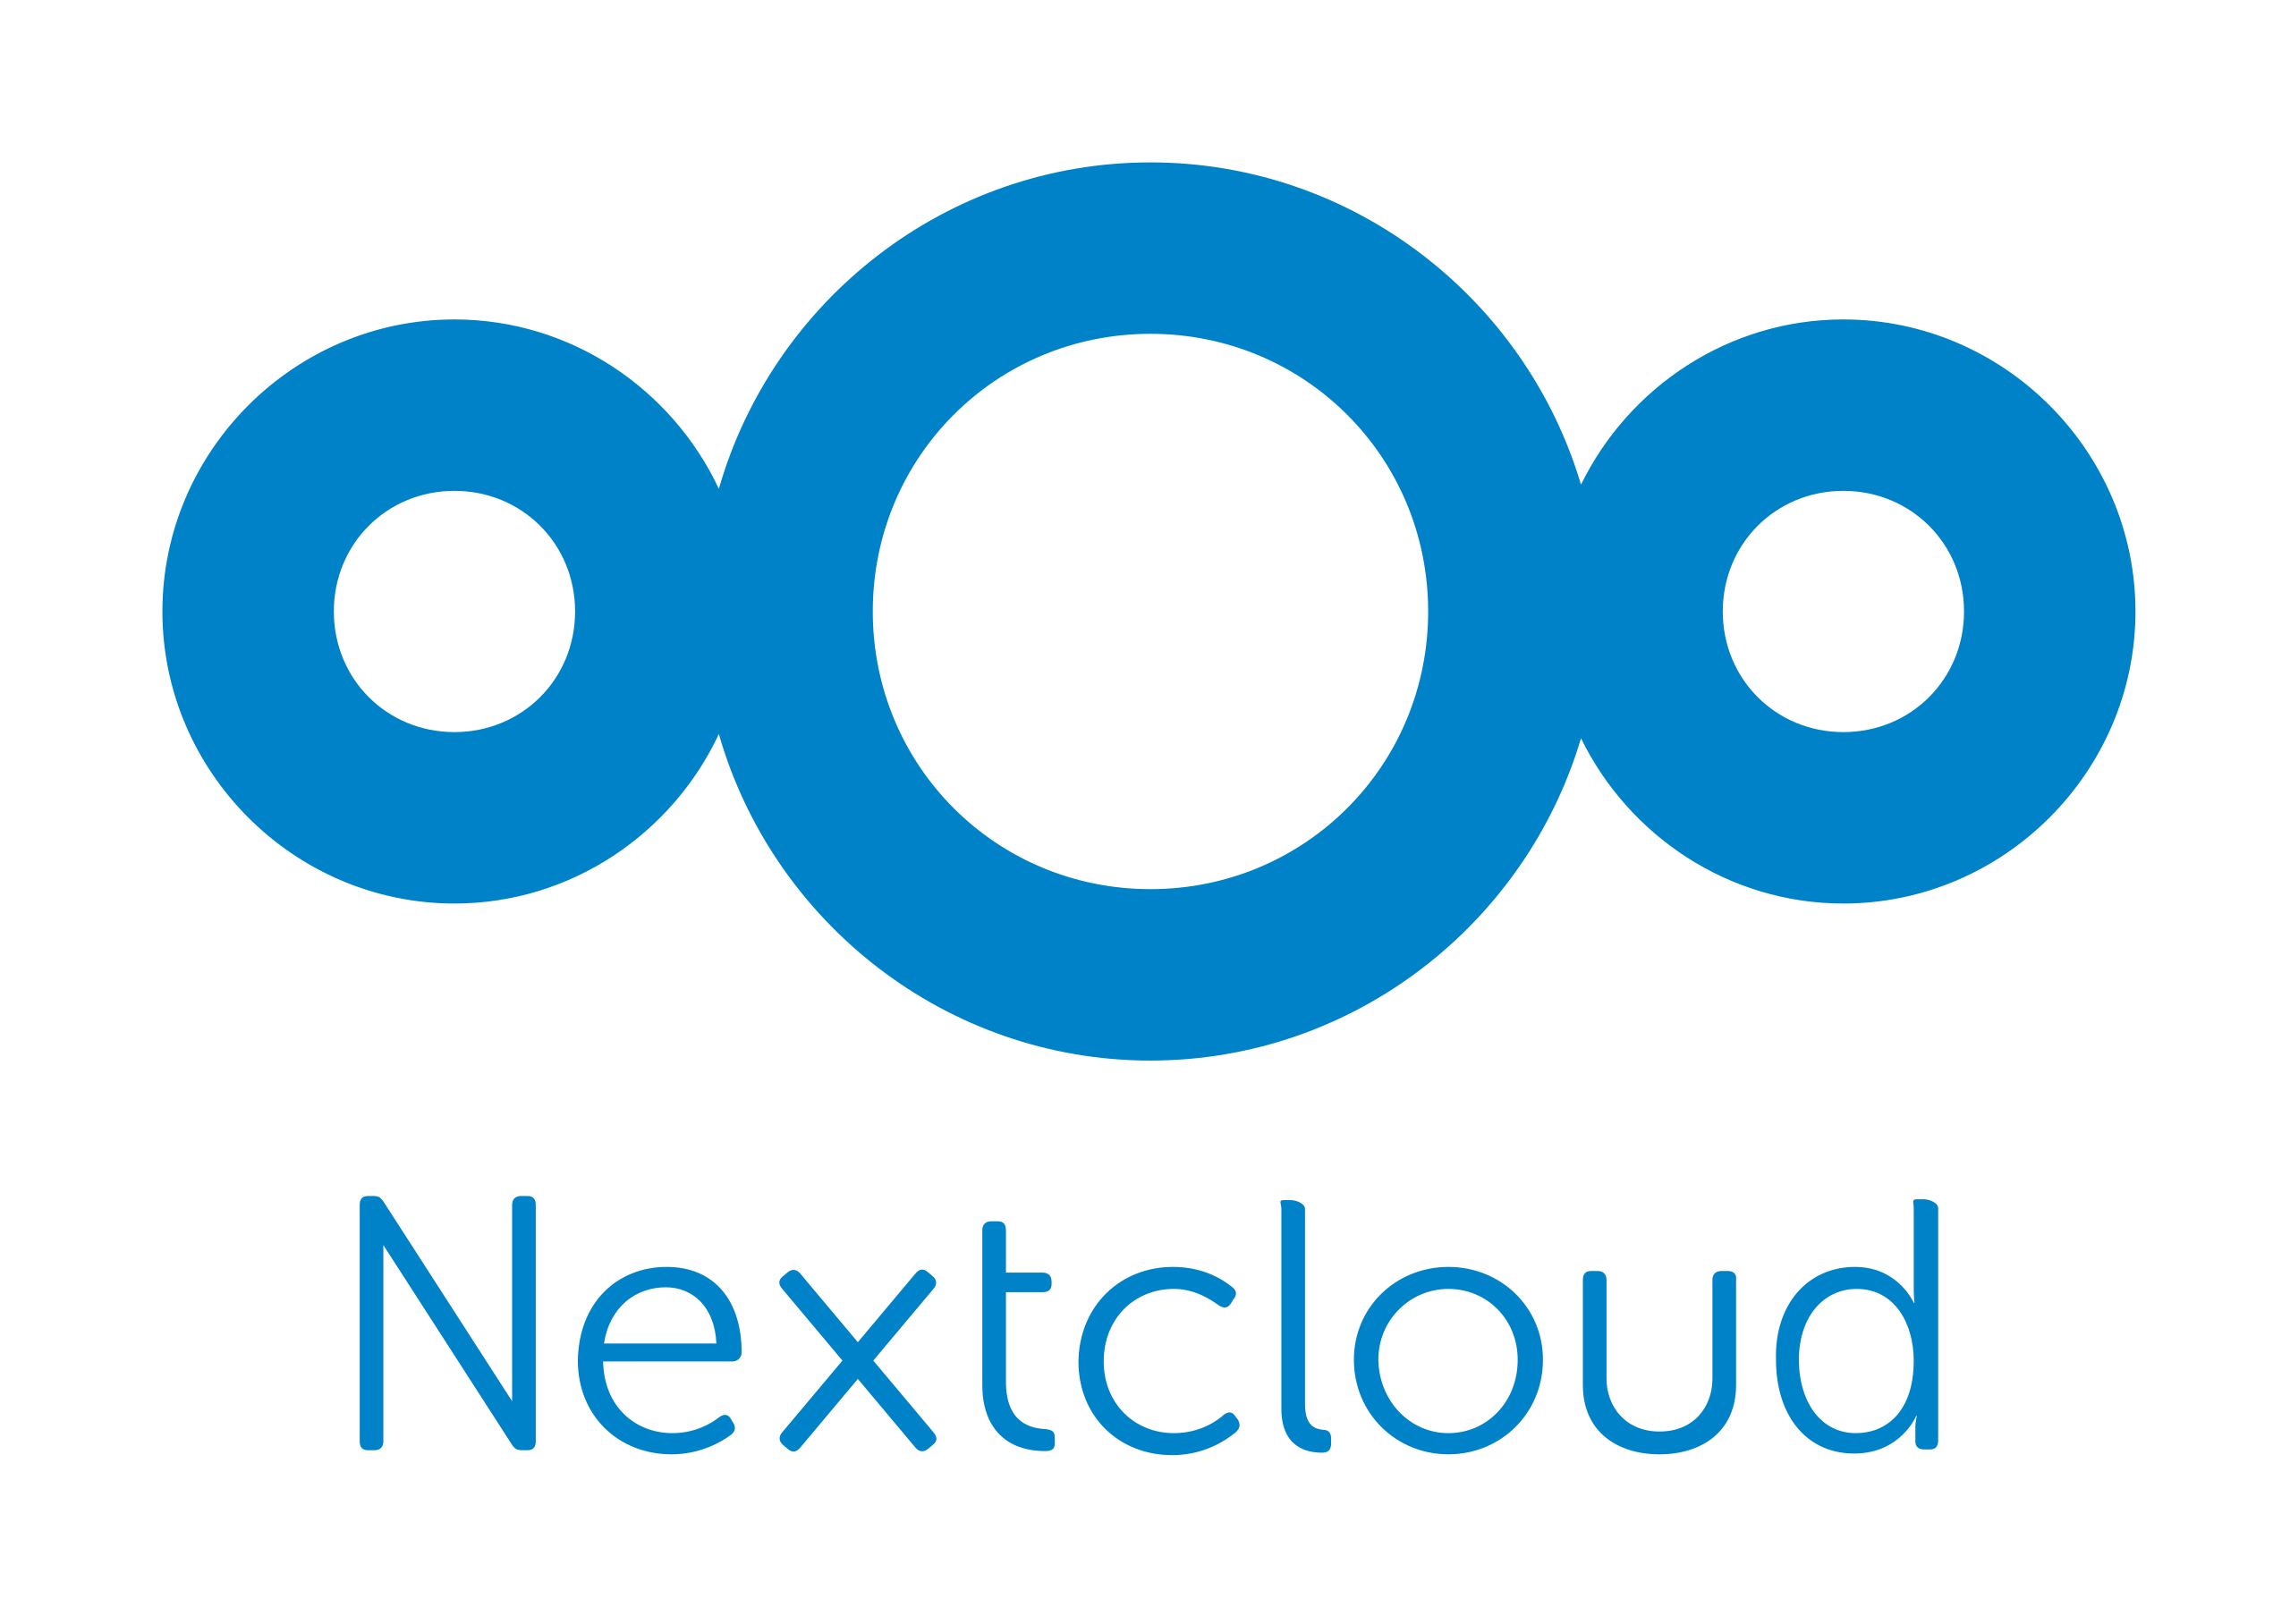 Nextcloud Hub